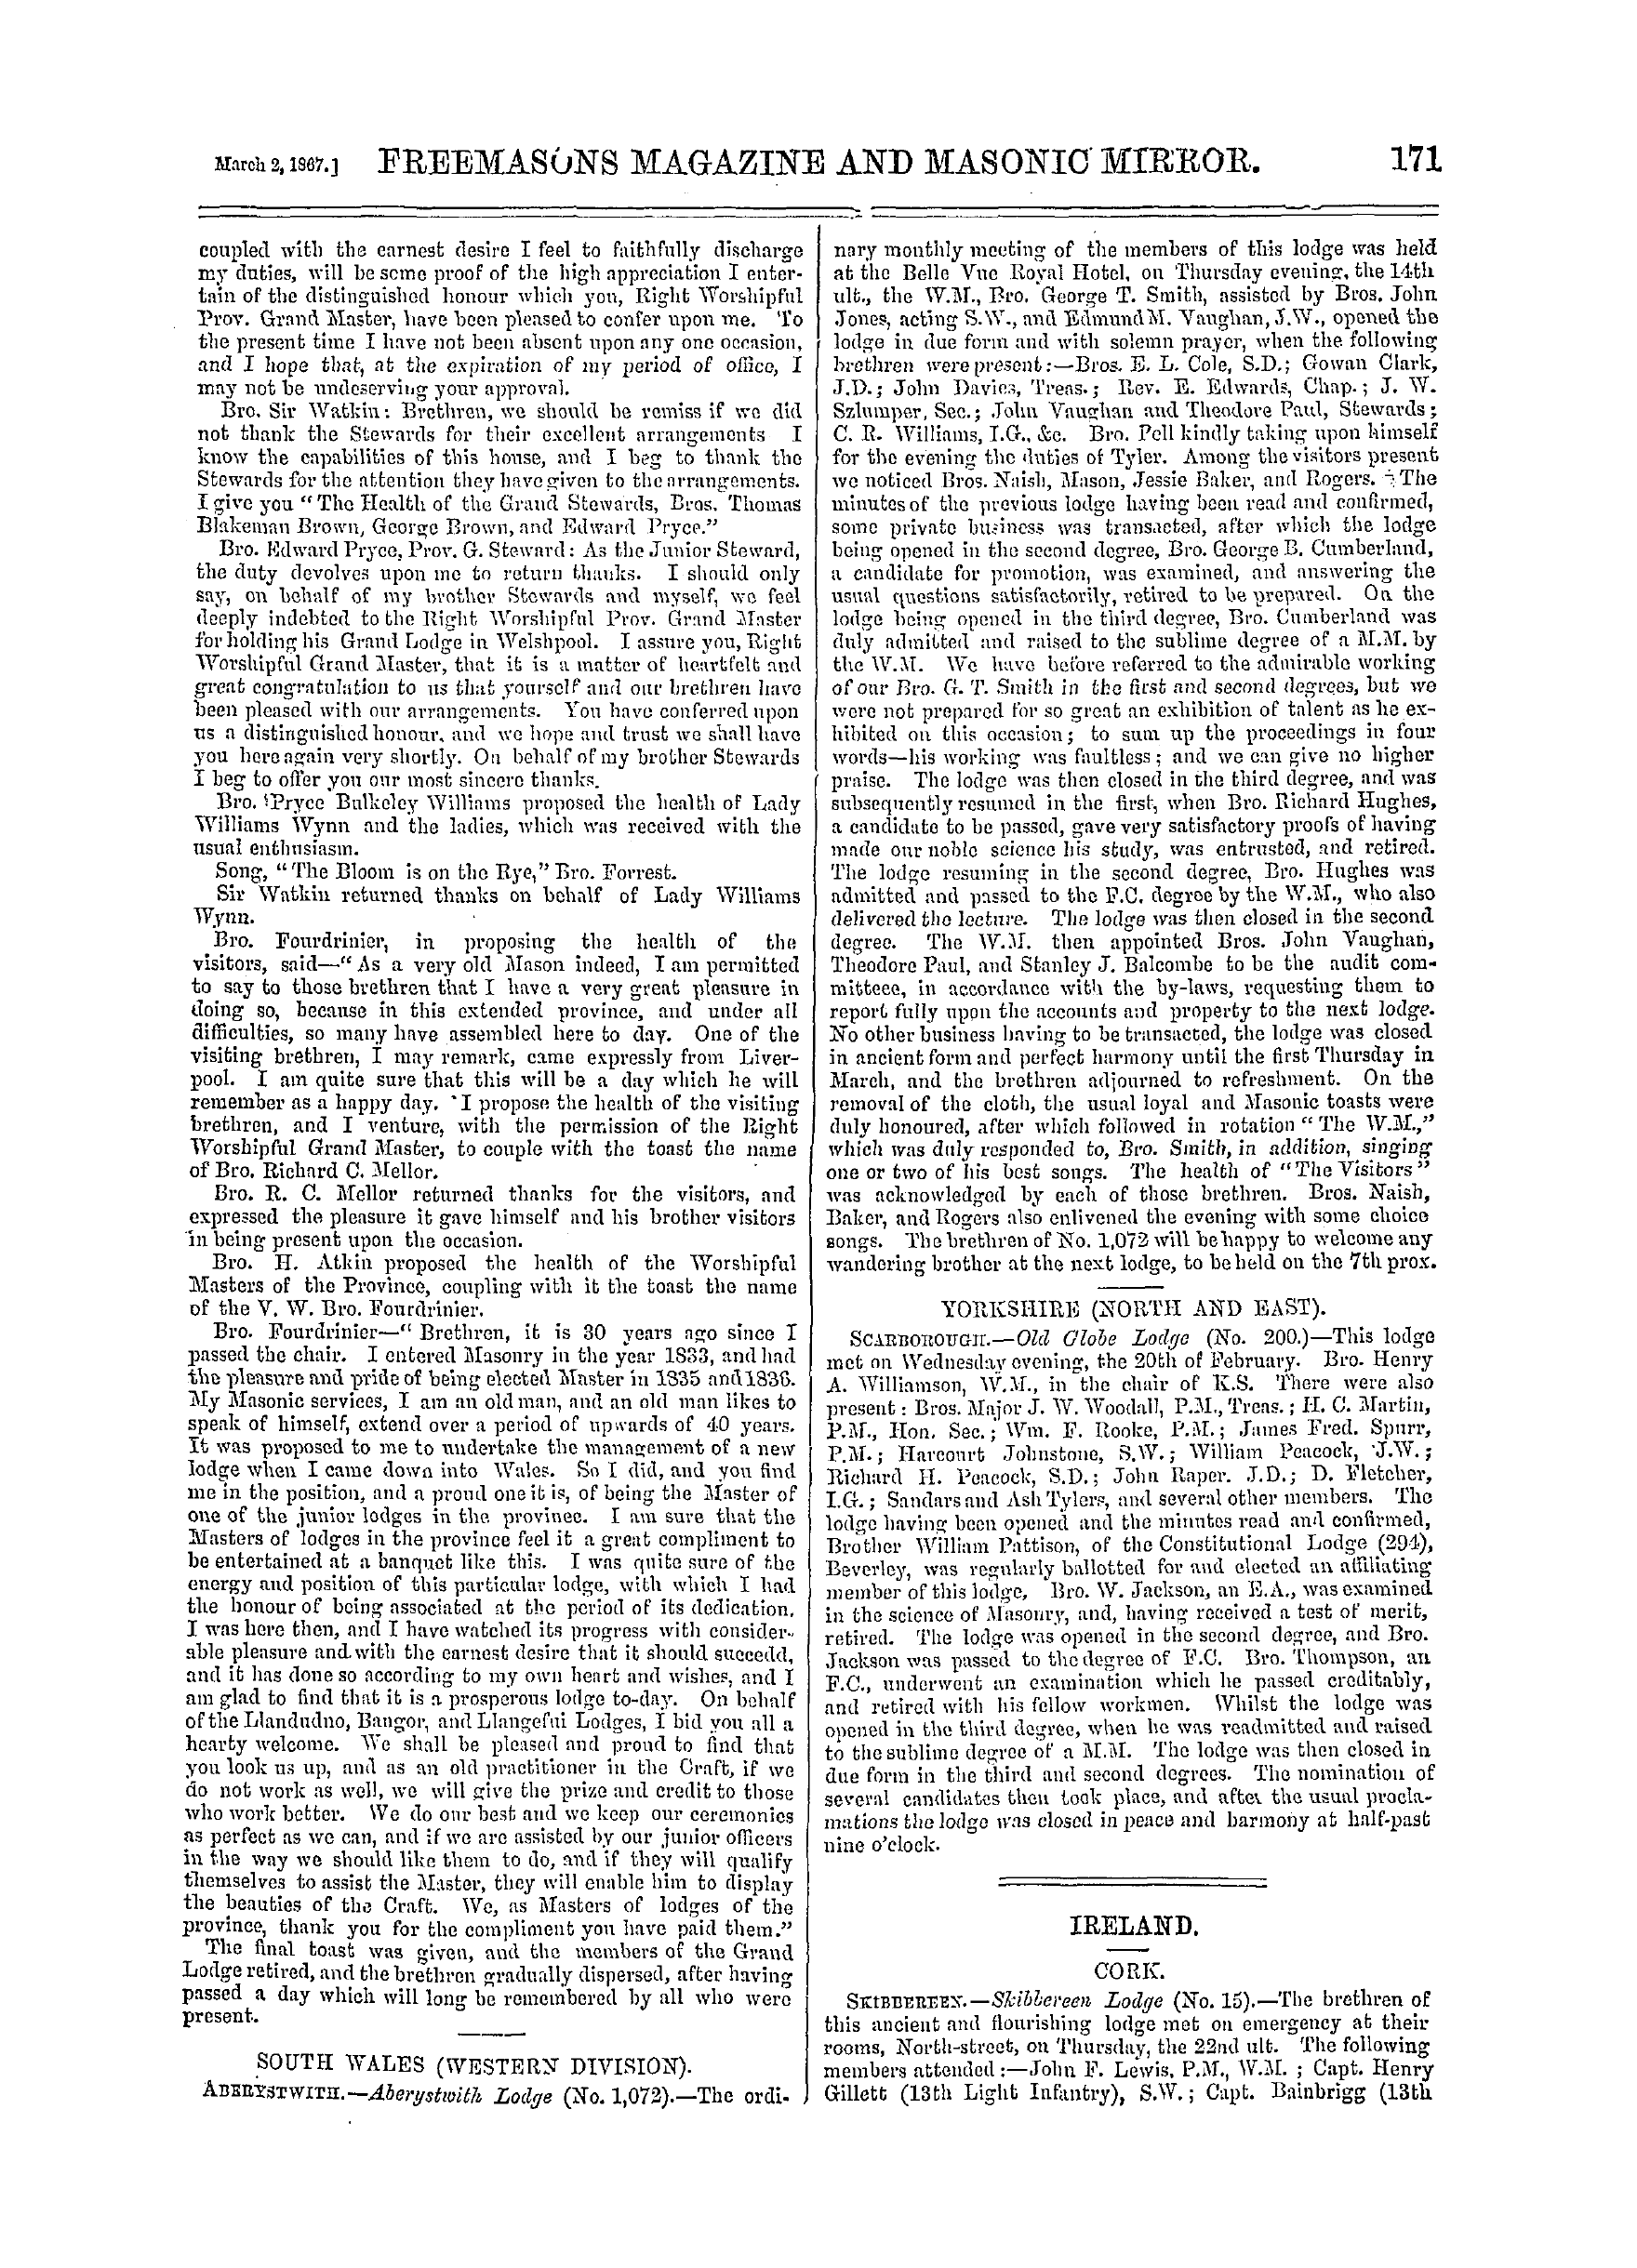 The Freemasons' Monthly Magazine: 1867-03-02 - Provincial.